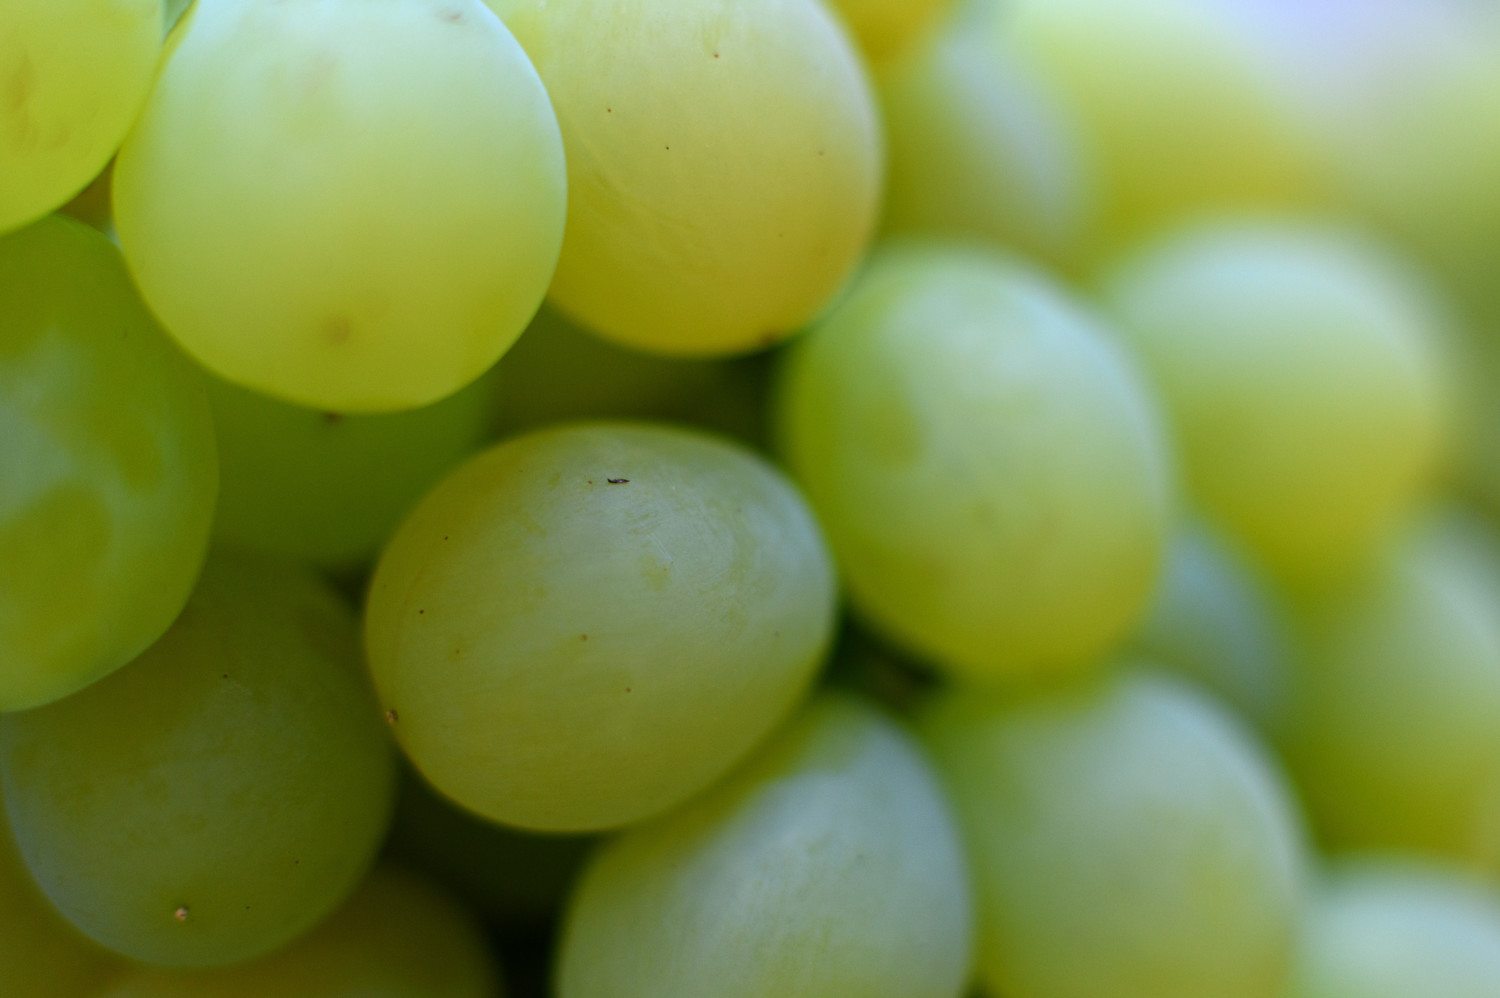 grapes photo